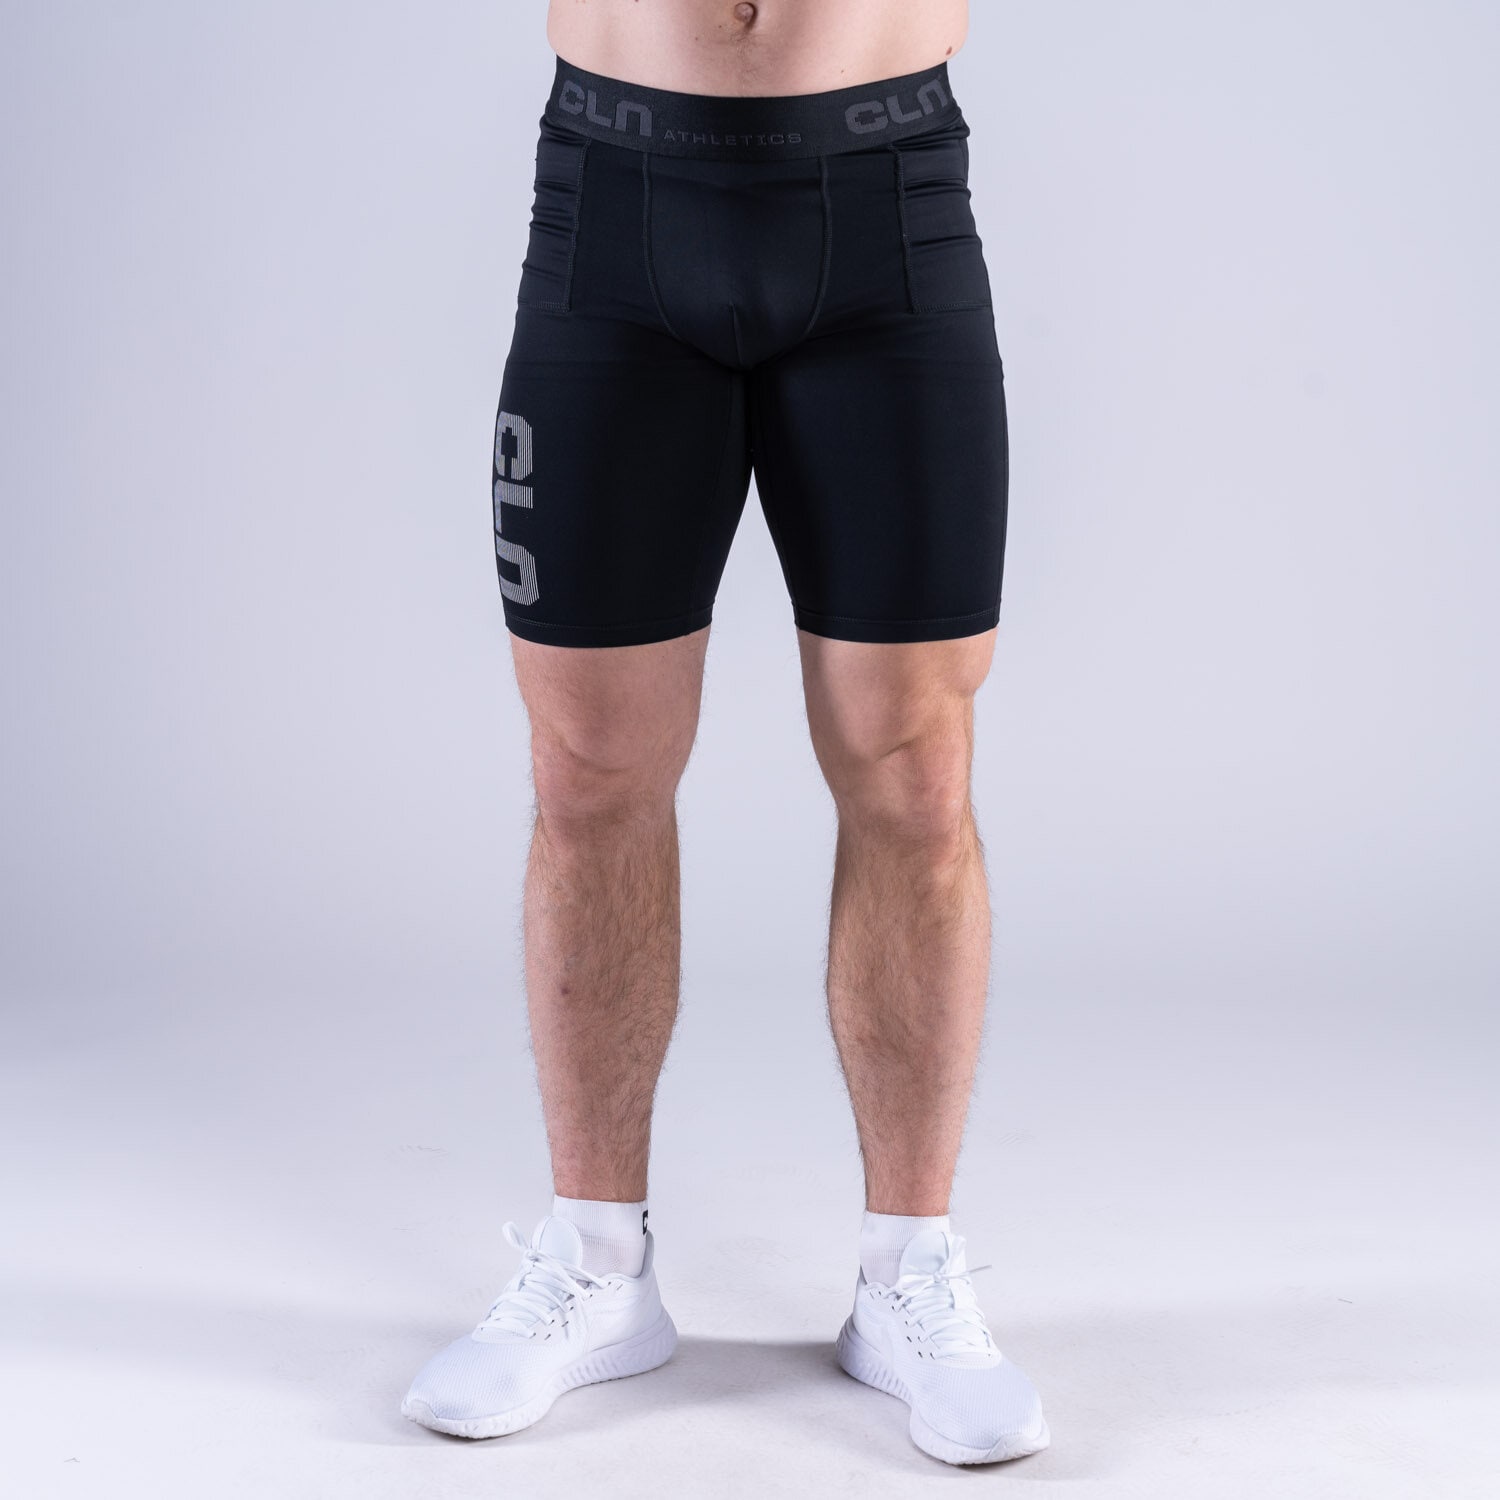 Gard shorts Black